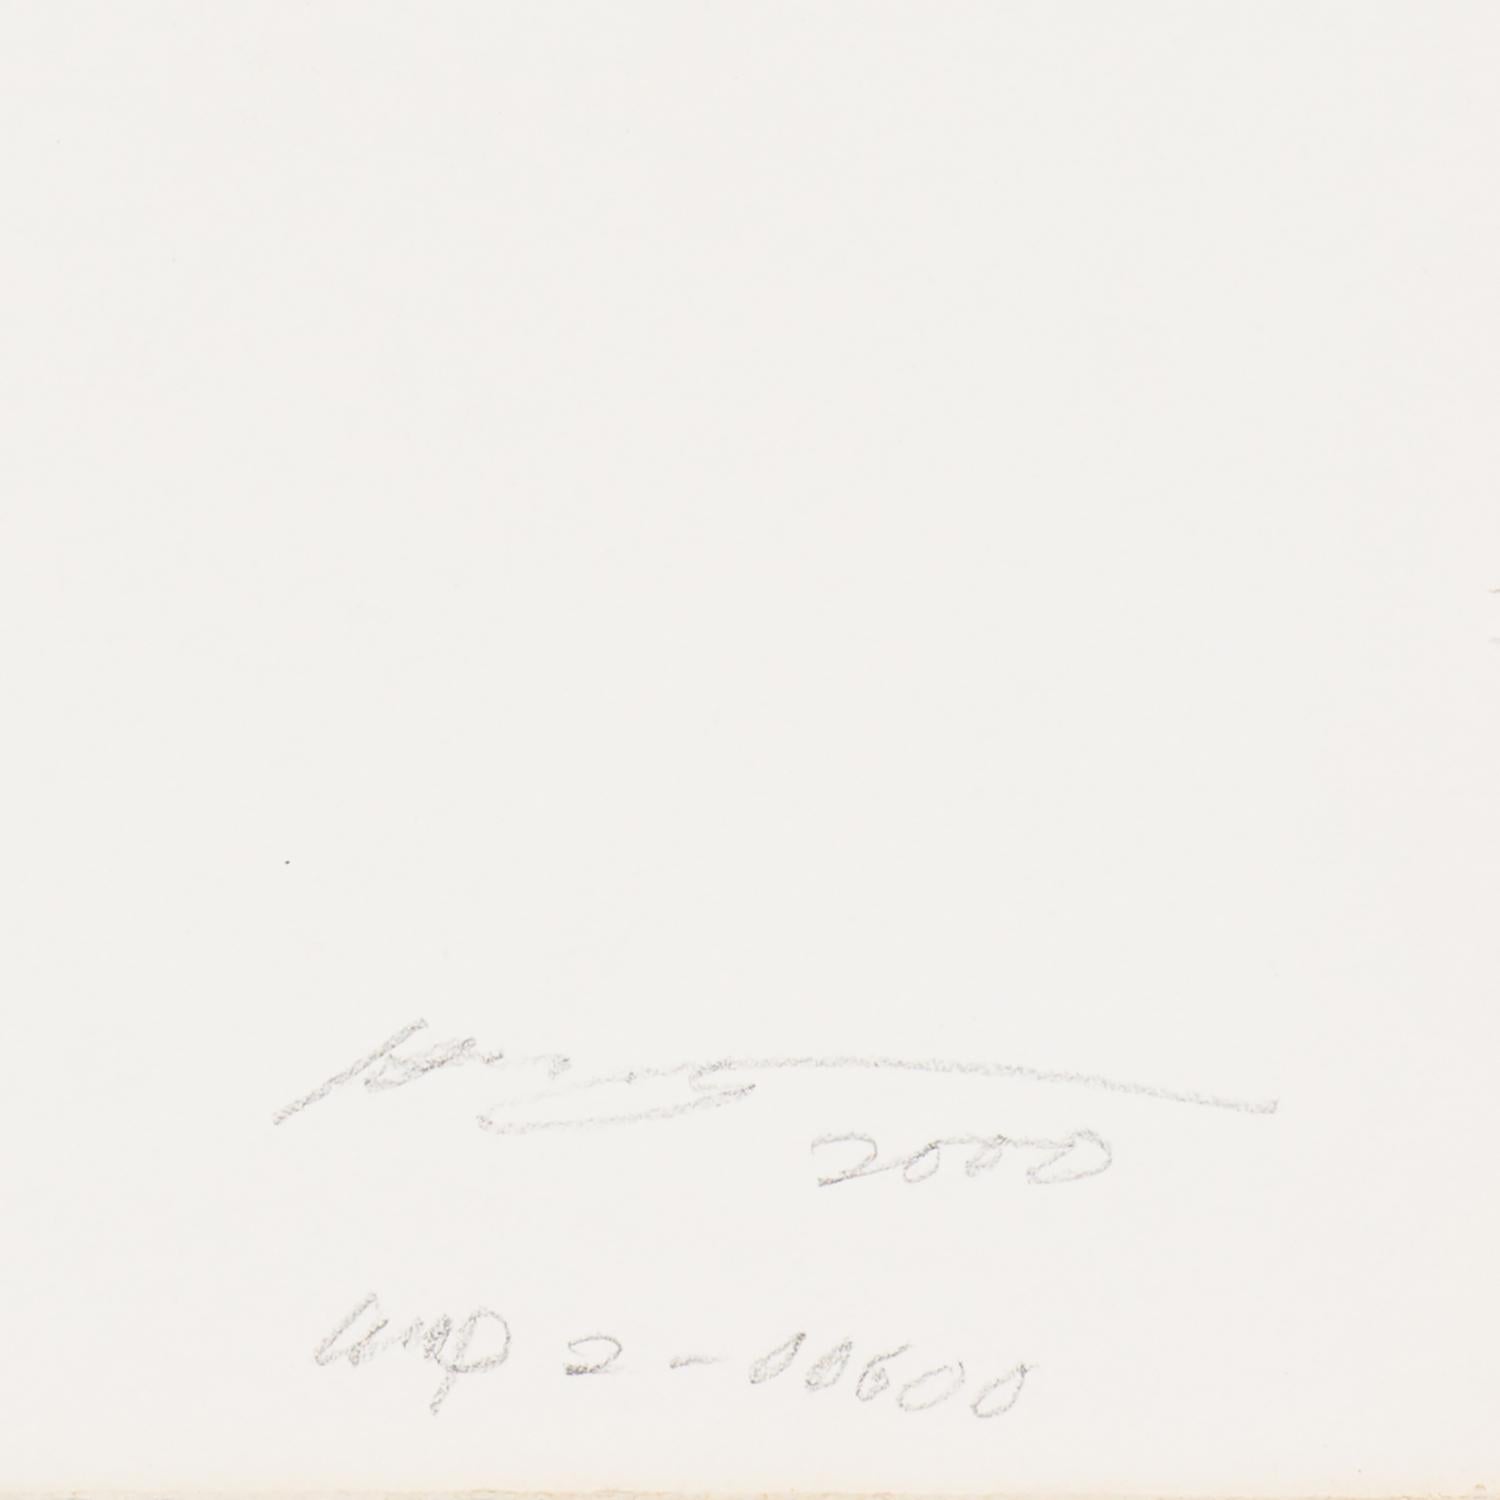 WOP 2-00600 - Gray Abstract Drawing by Hiro Yokose